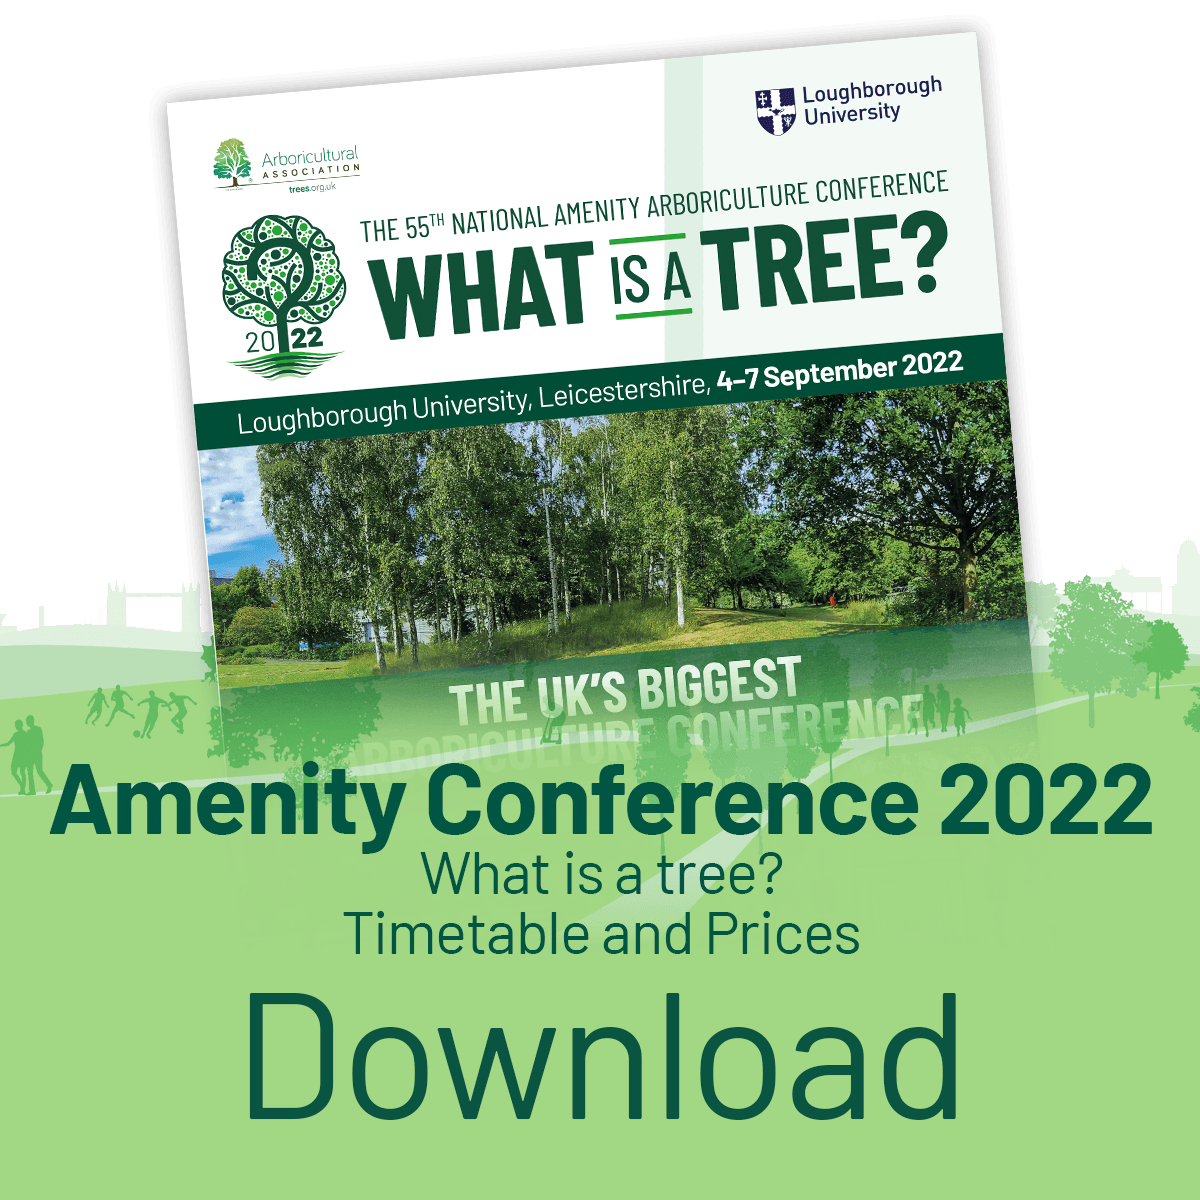 Download the Conference 2022 leaflet